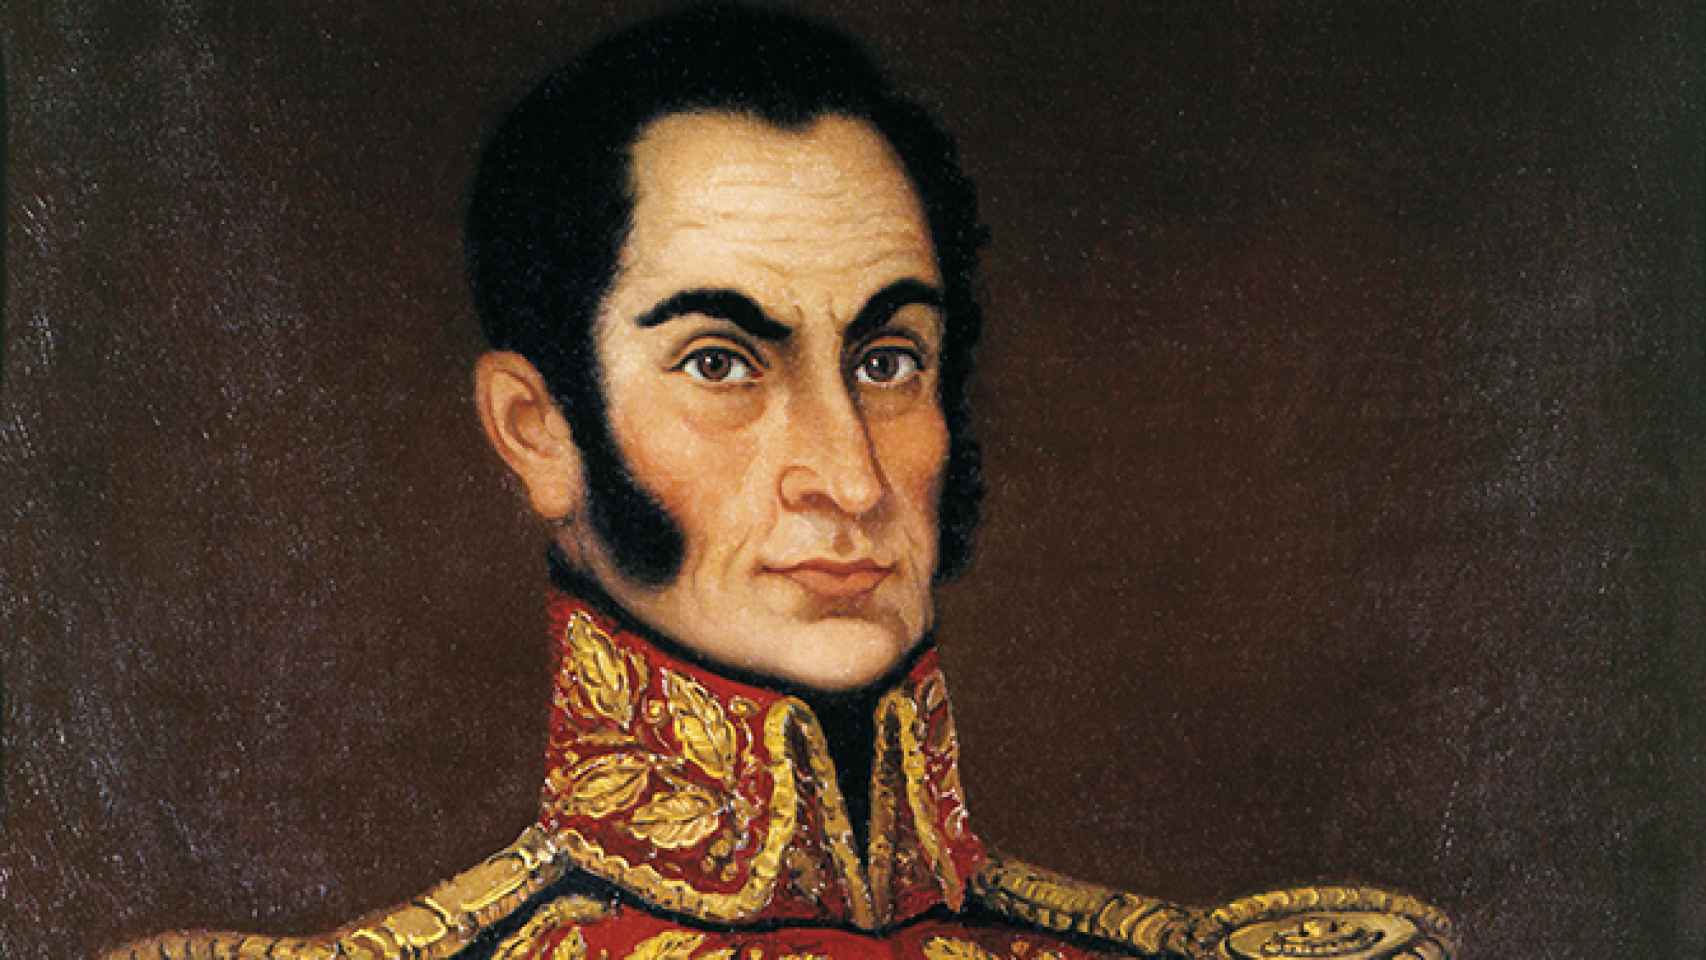 La cara oculta de Simón Bolívar: el mujeriego insaciable al que apodaron  